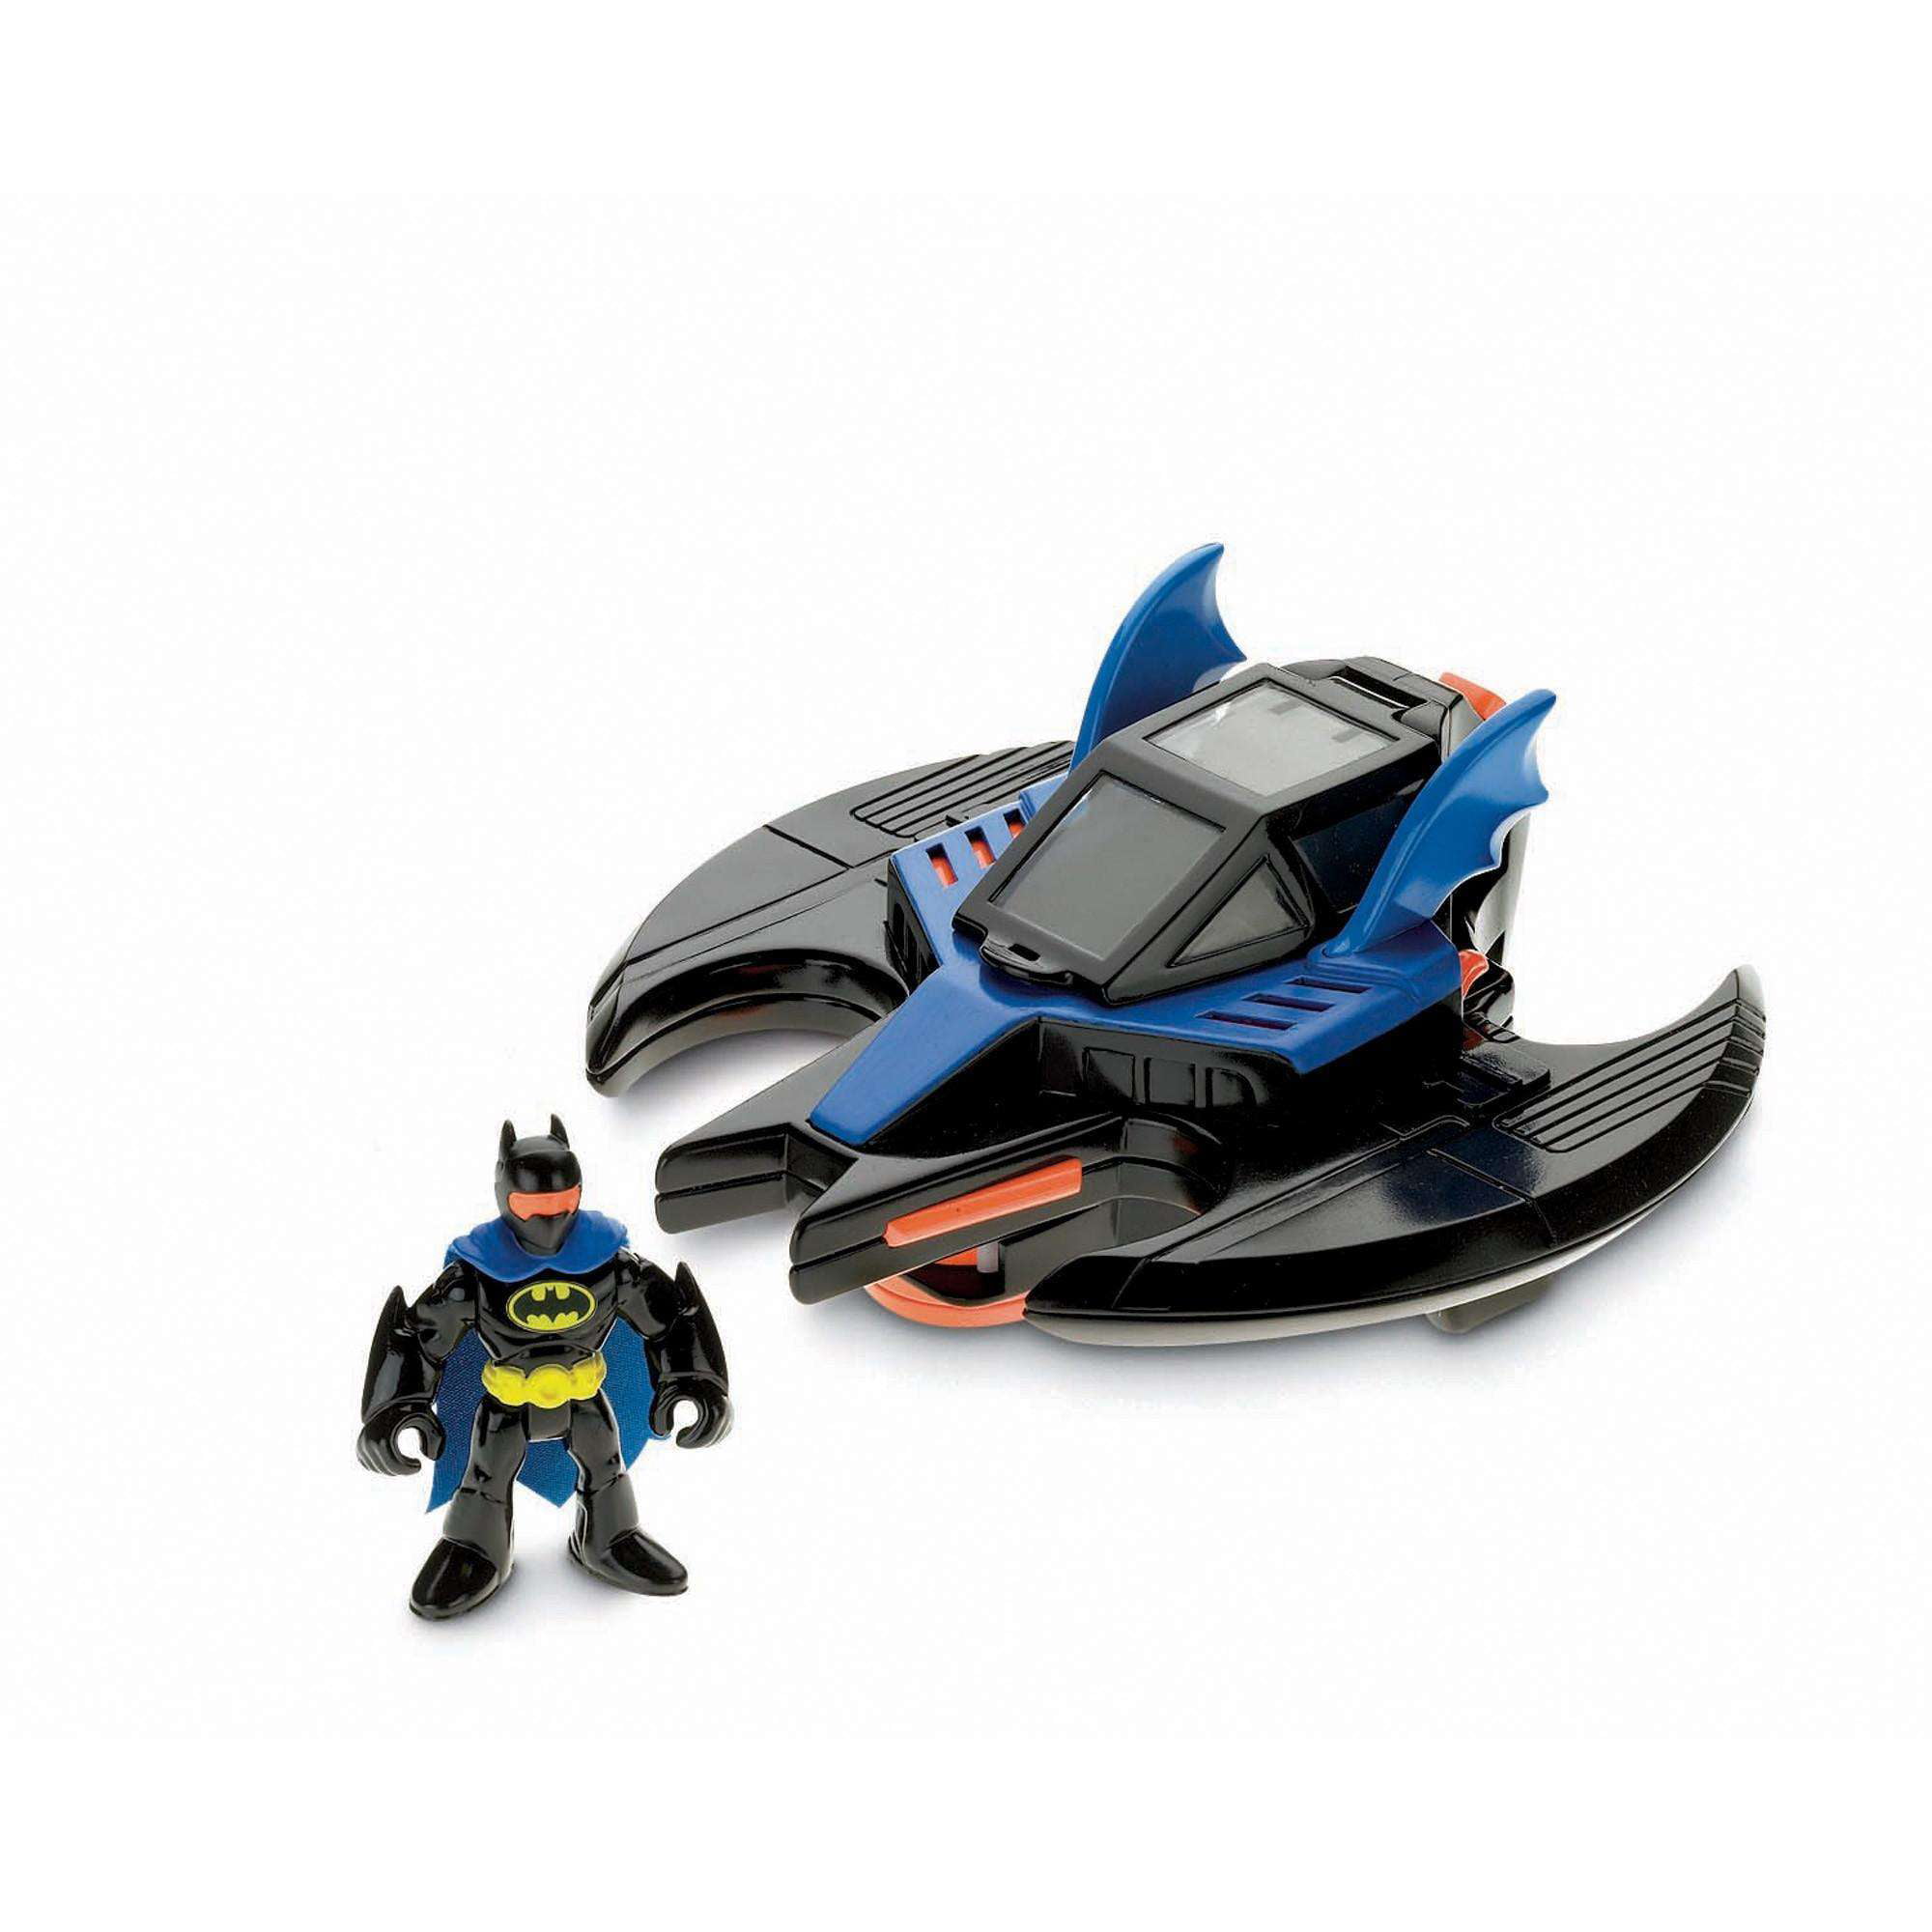 DC Super Friends Imaginext Batman Batwing Figure and Accessories Toy for sale online 